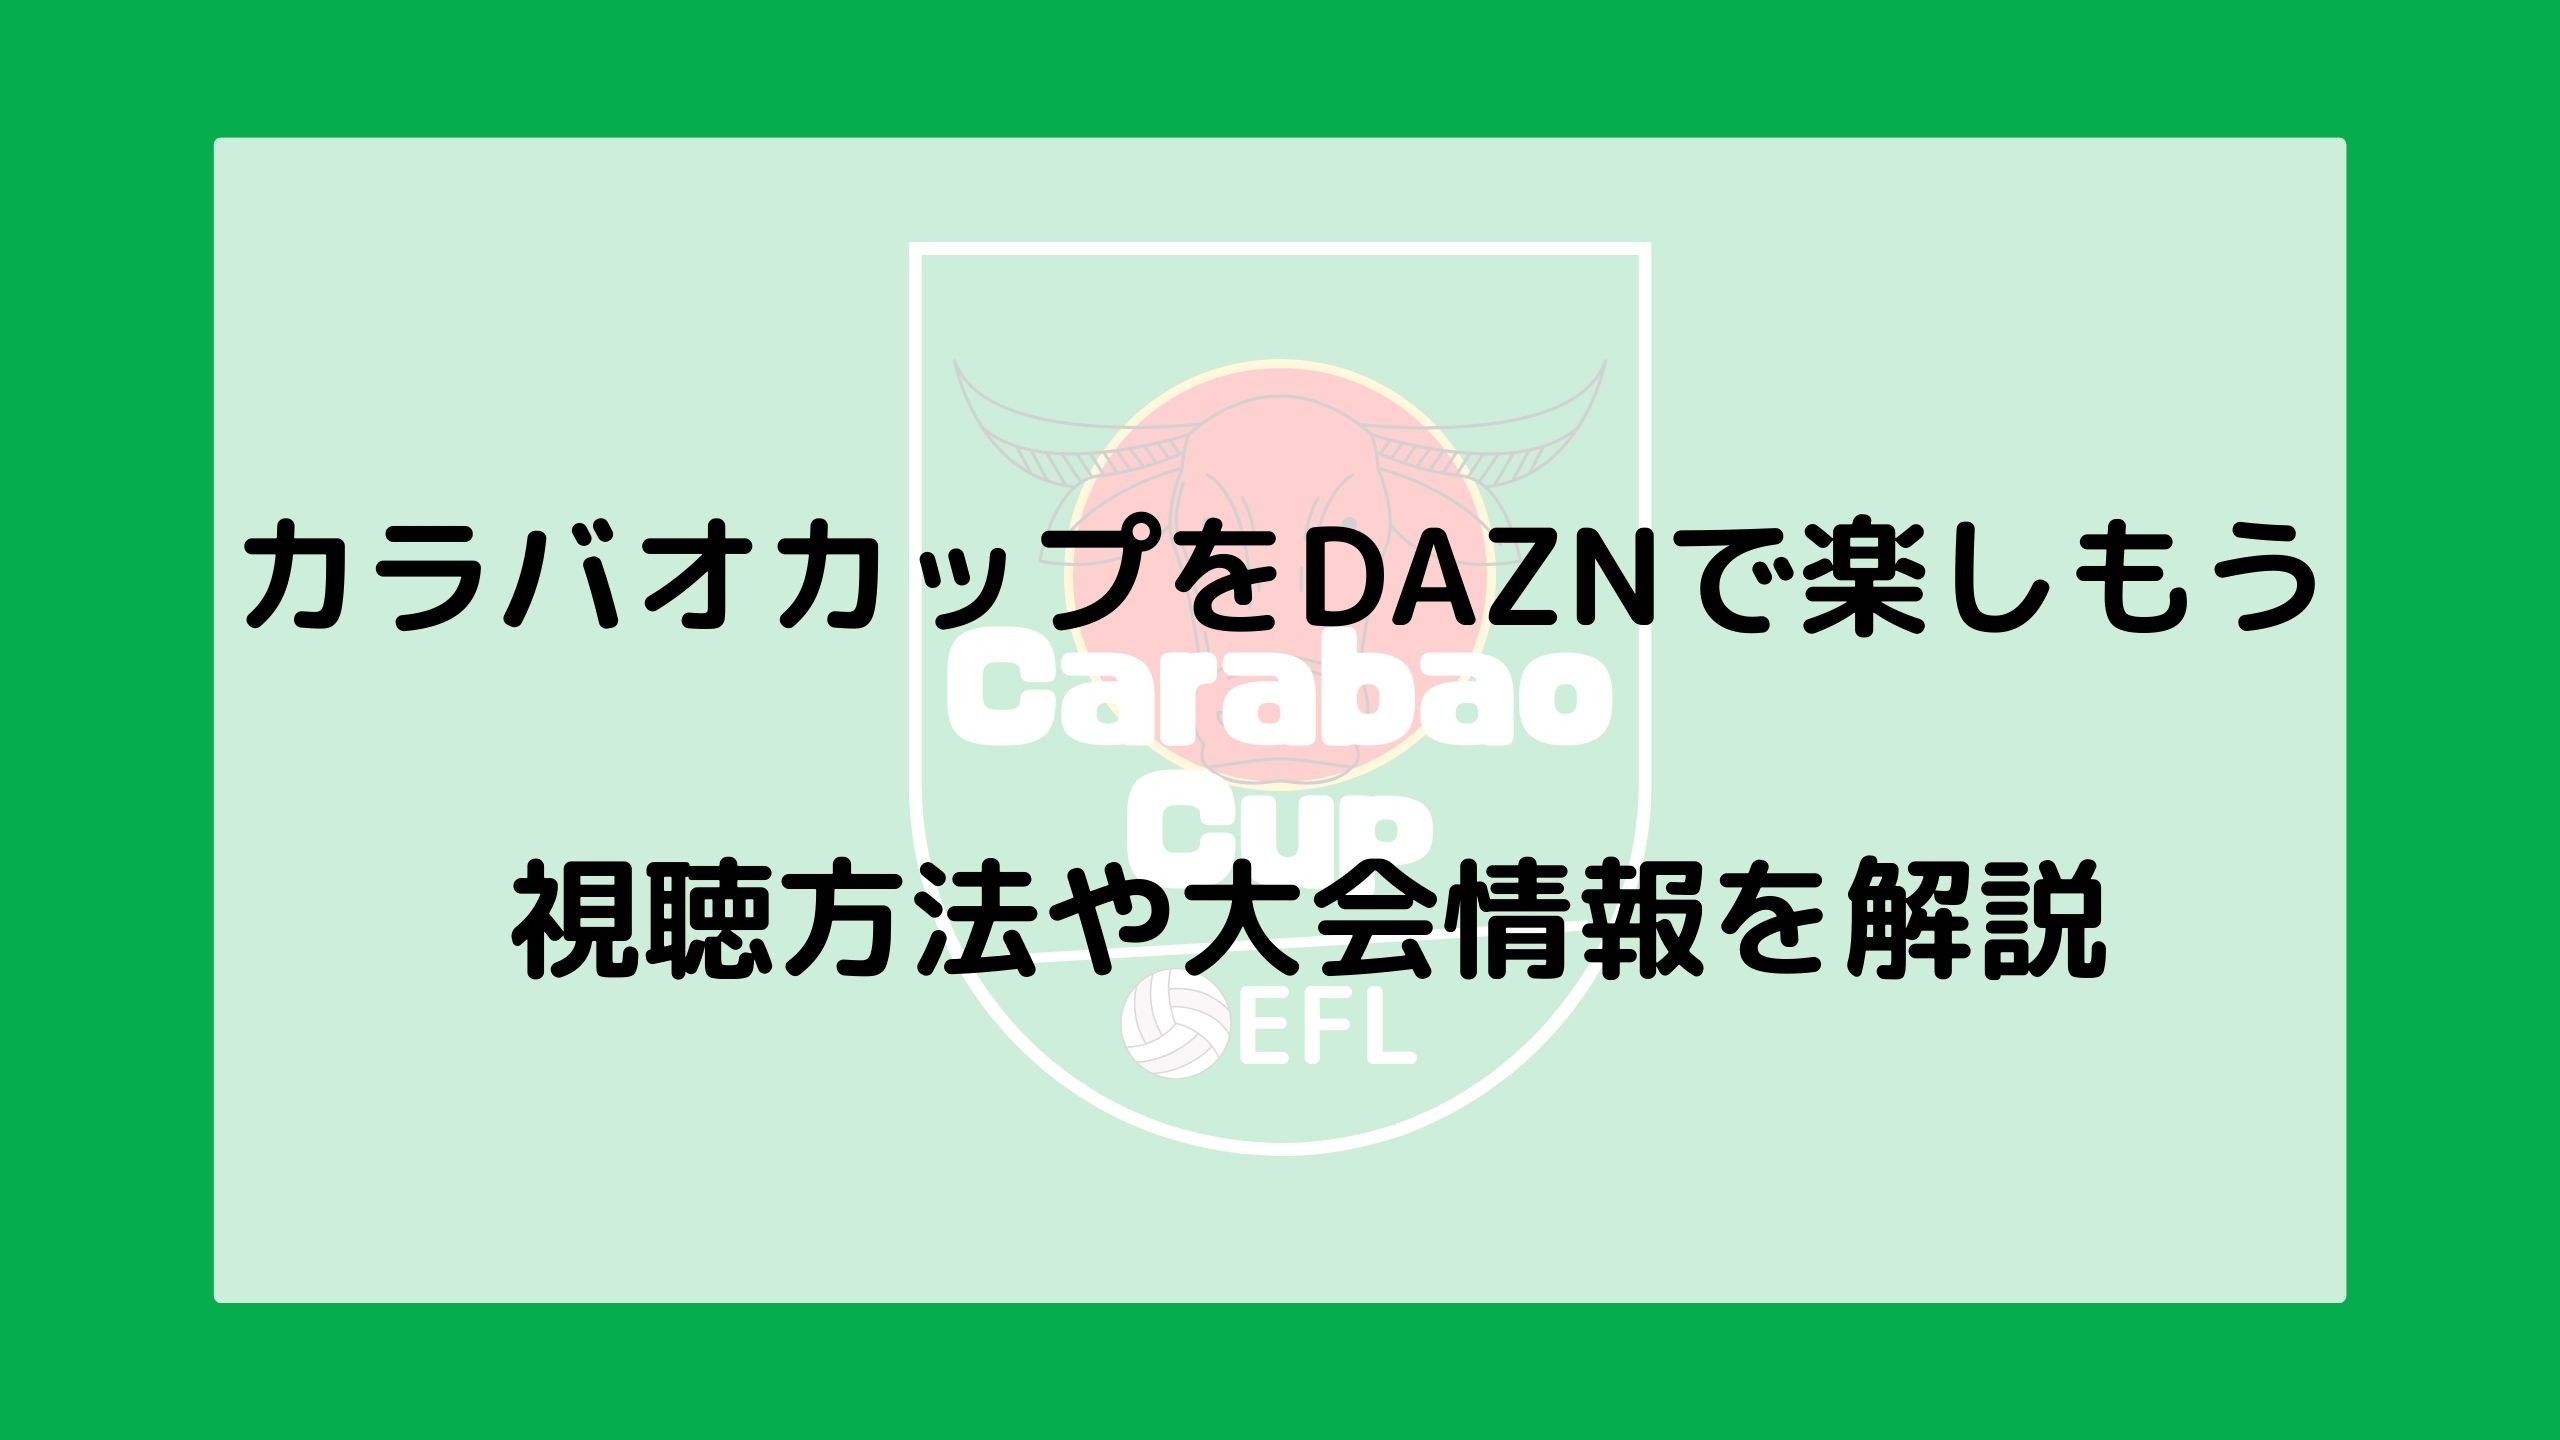 dazn-carabao-cup110911